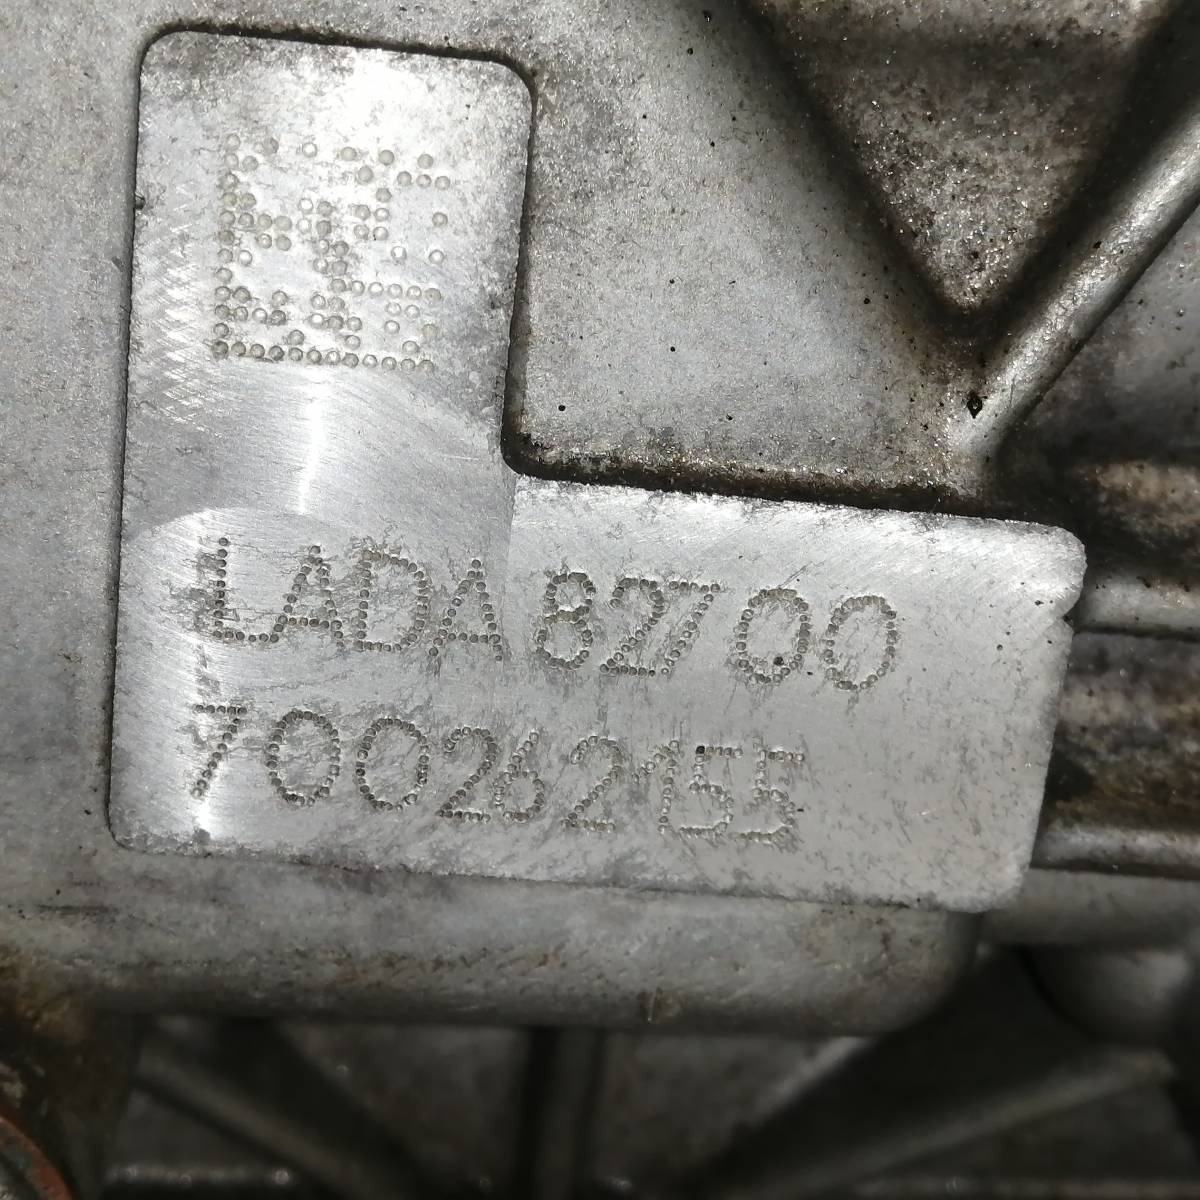 РКПП (роботизированная коробка переключения передач) Lada Priora 2007-2014